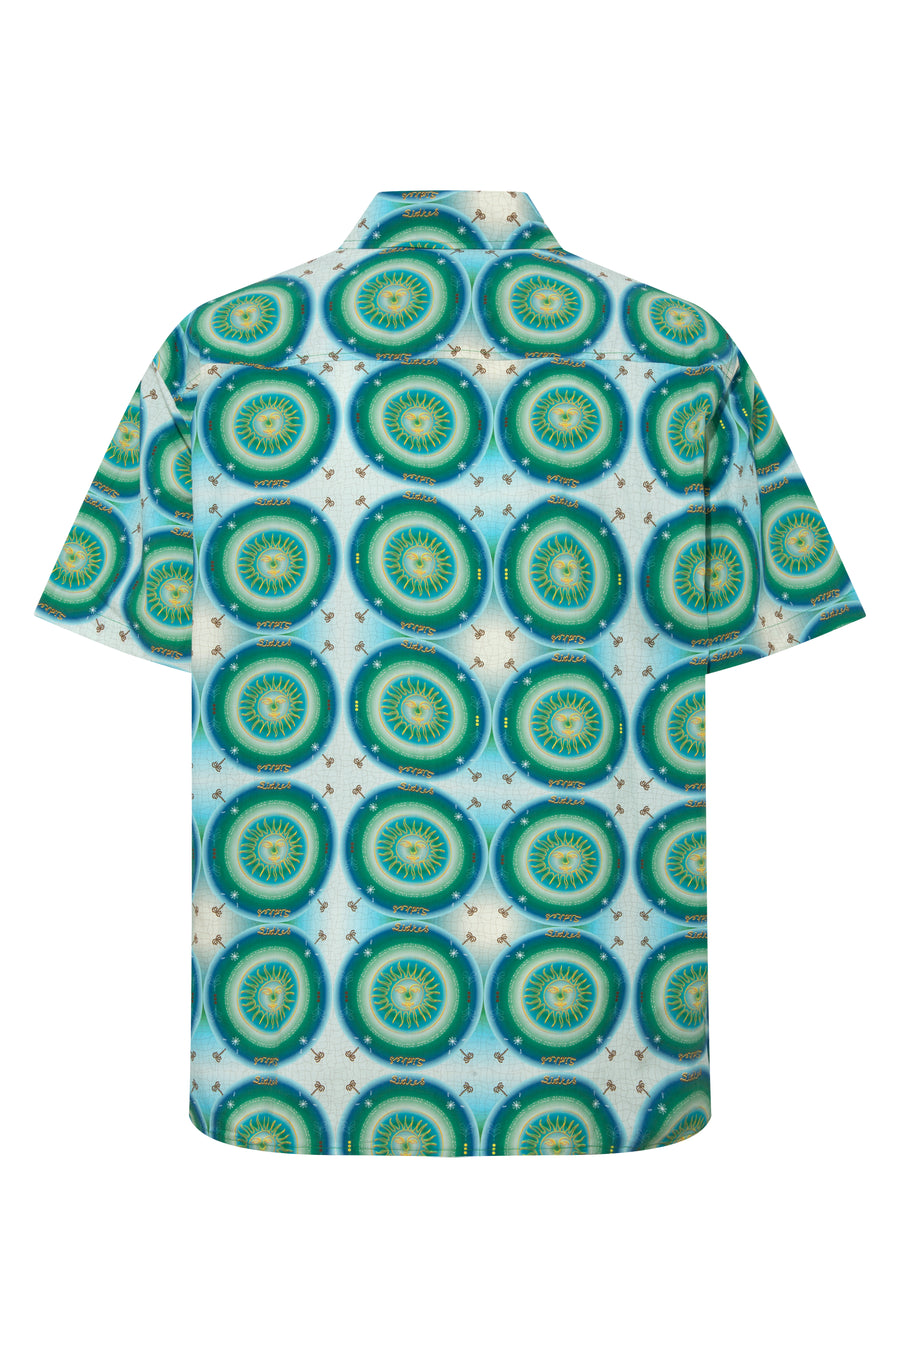 MARCO - Sun printed short sleeve shirt